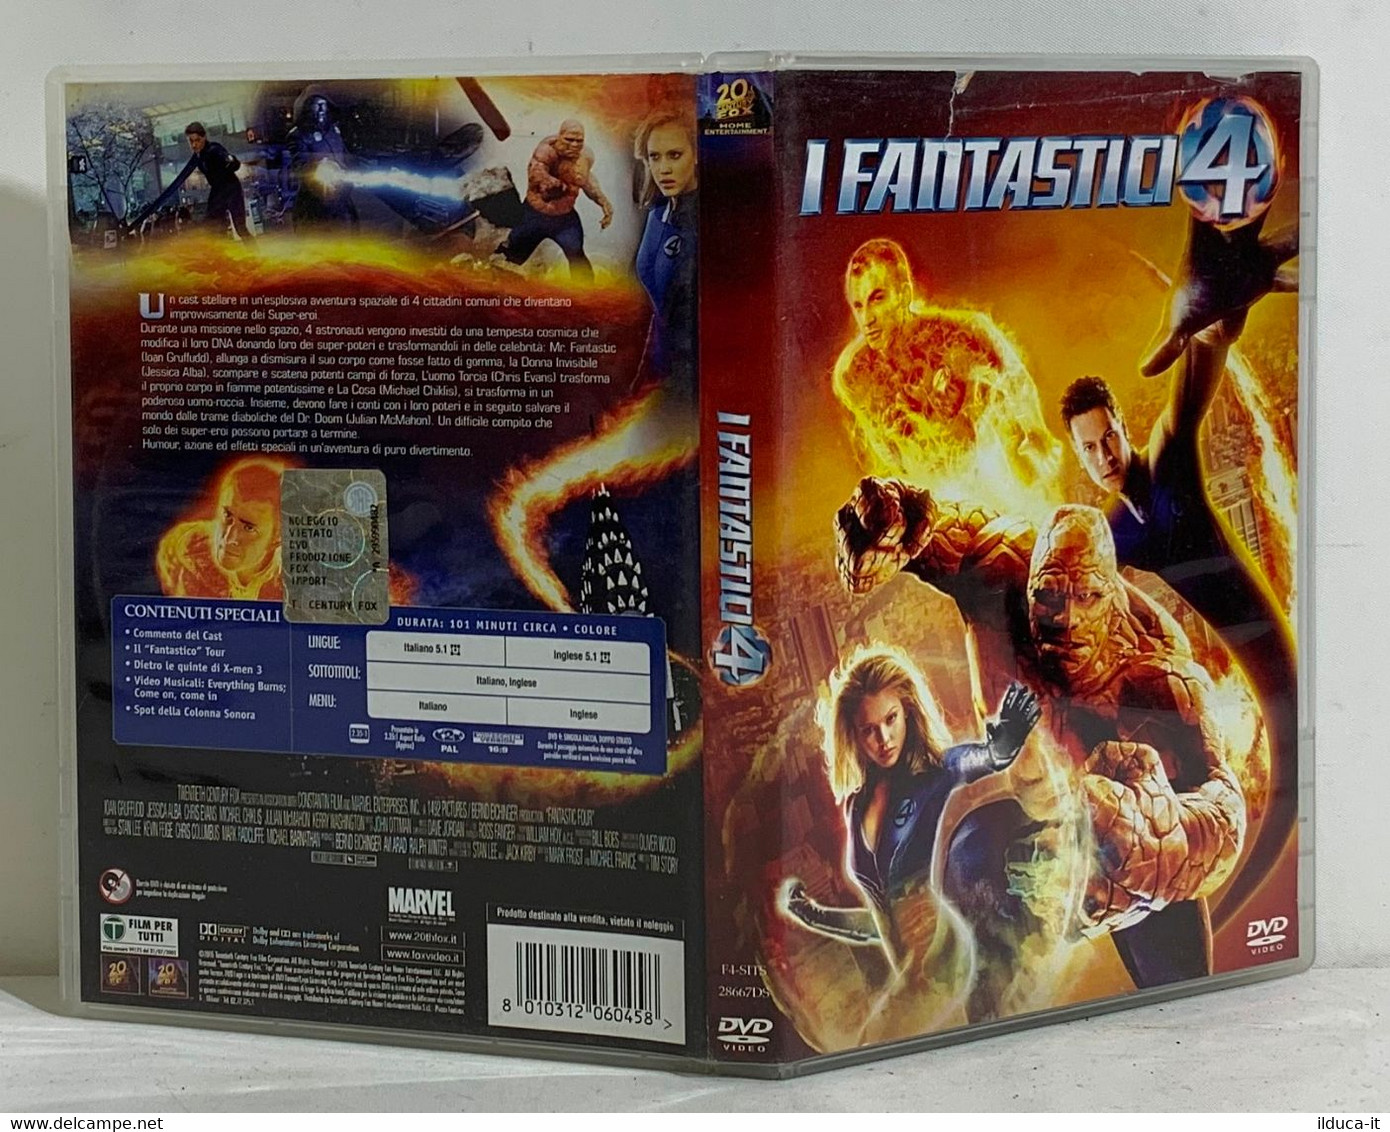 I100808 DVD - I Fantastici 4 (2005) - Jessica Alba / Chris Evans - Sci-Fi, Fantasy